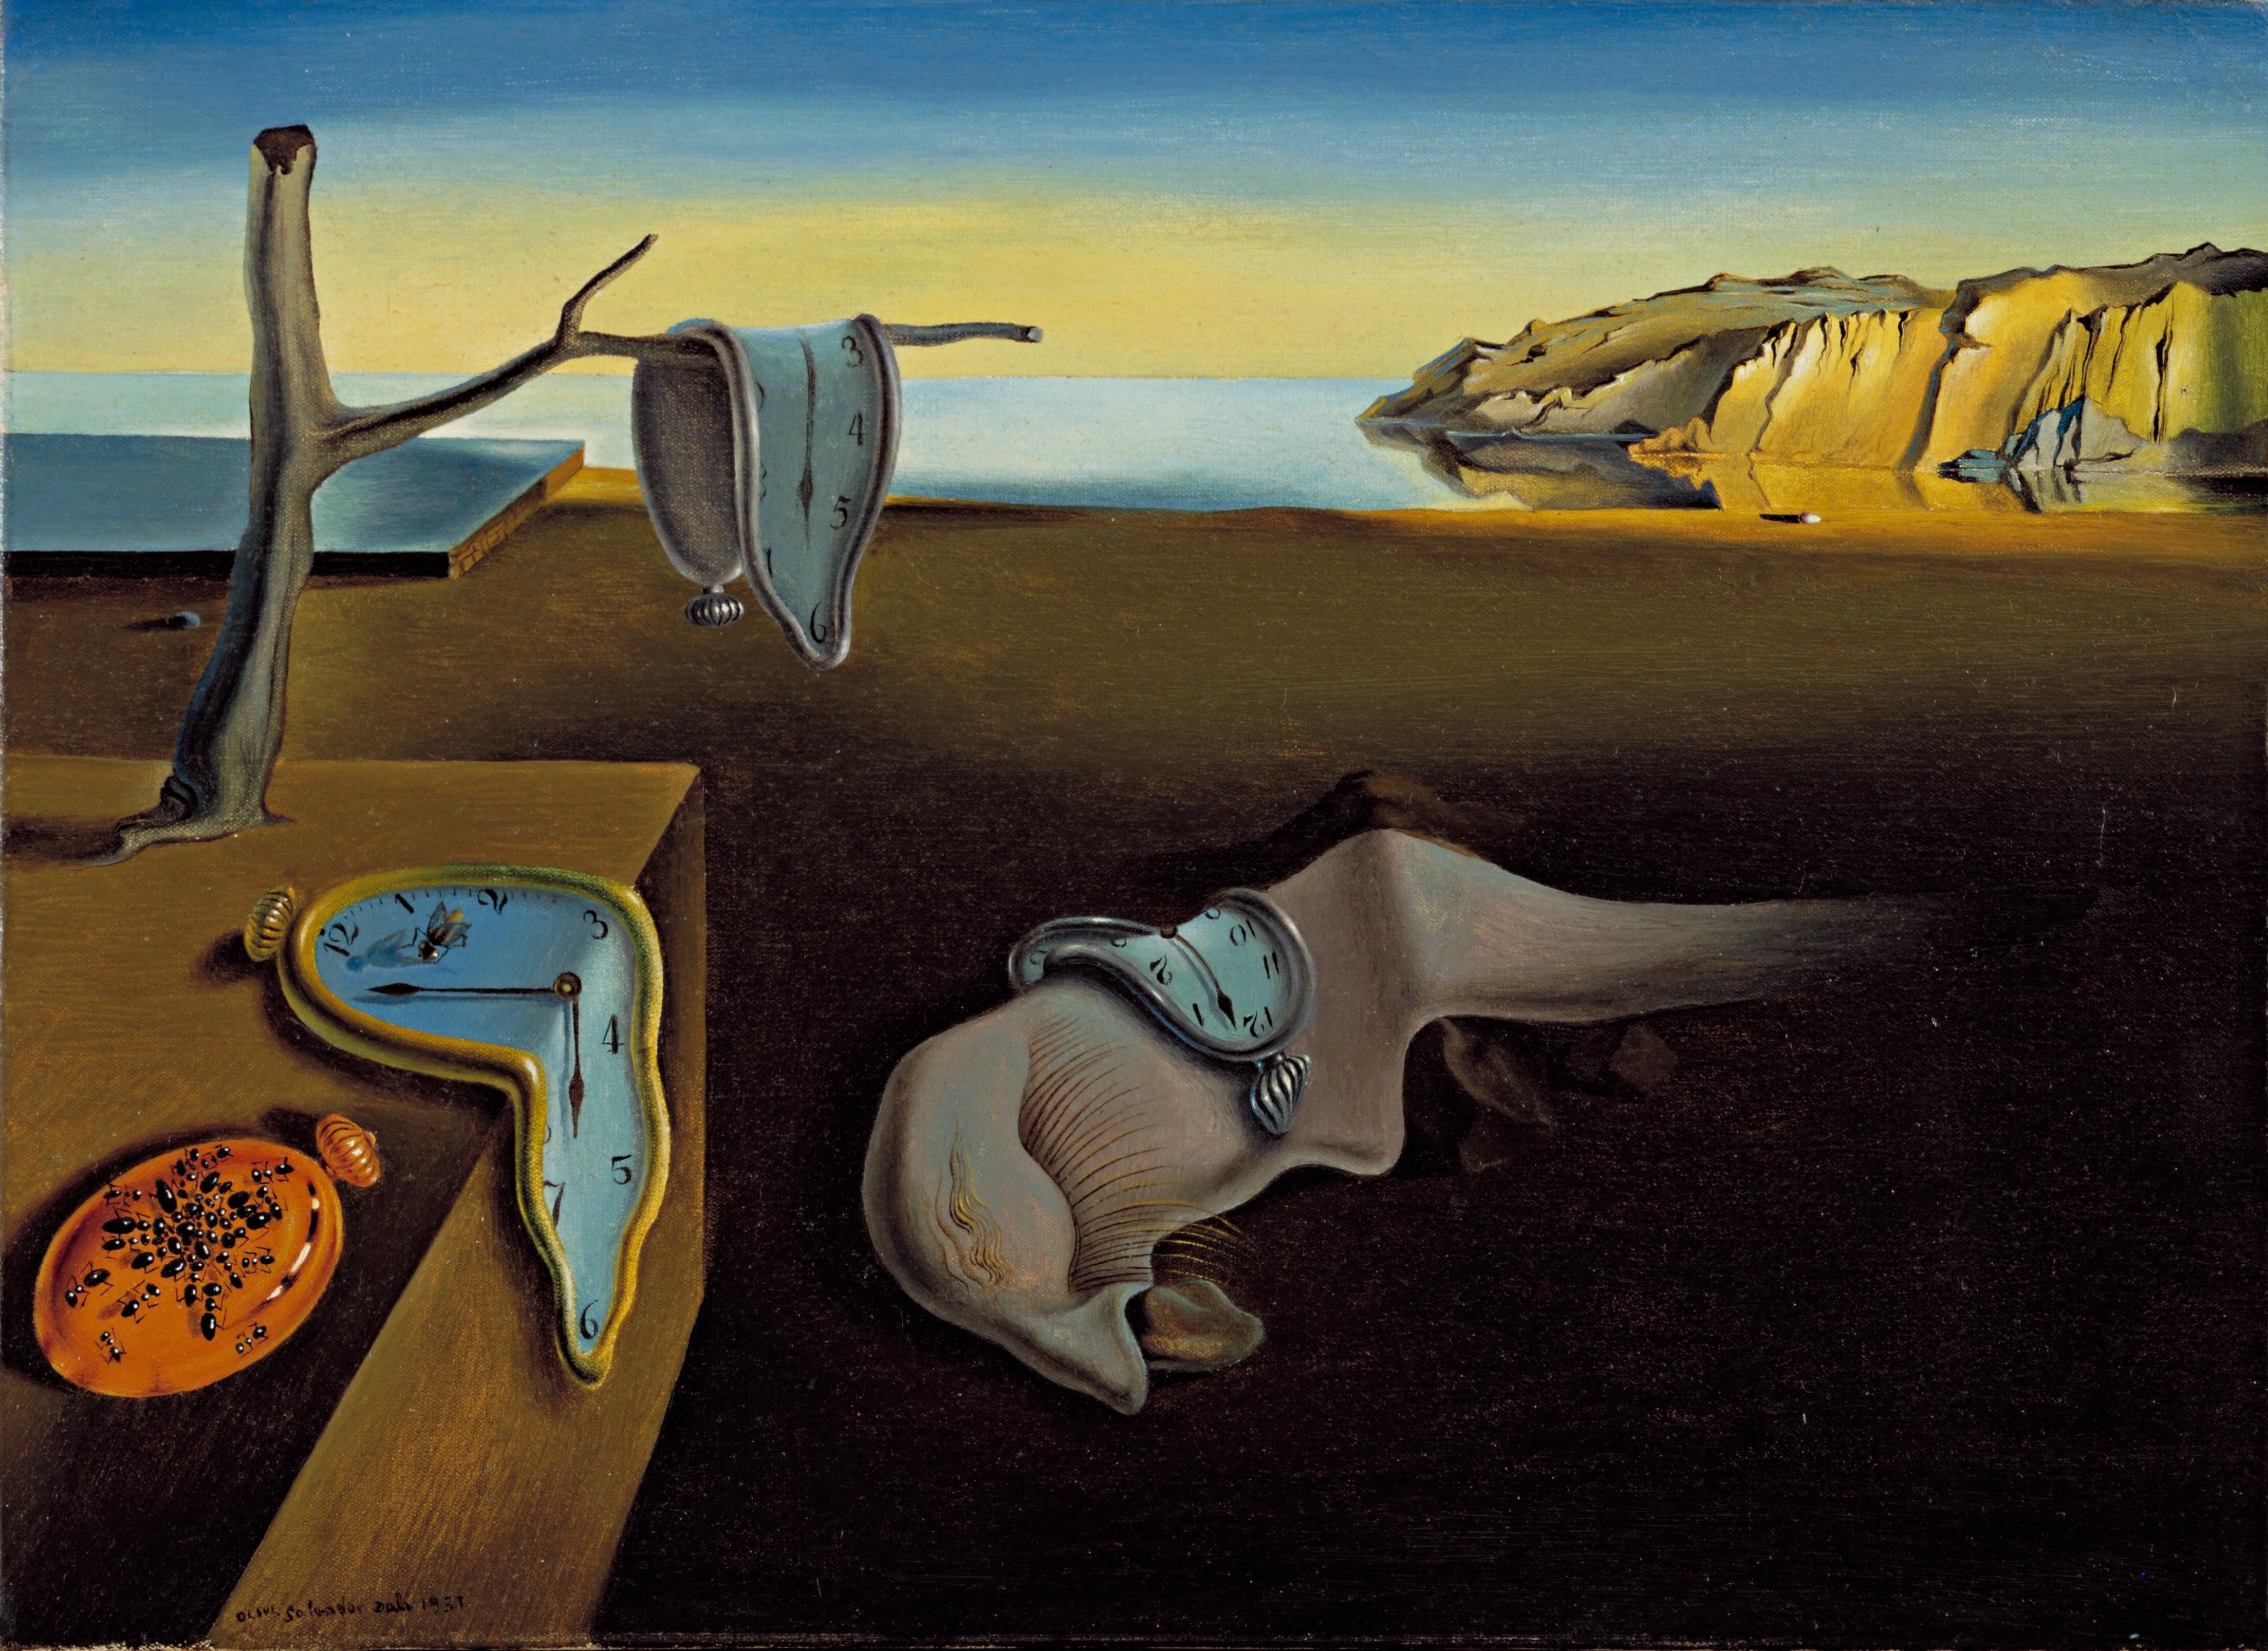 Painting Salvador Dali Surreal Classic Art Melting Clocks Landscape 4414x3214